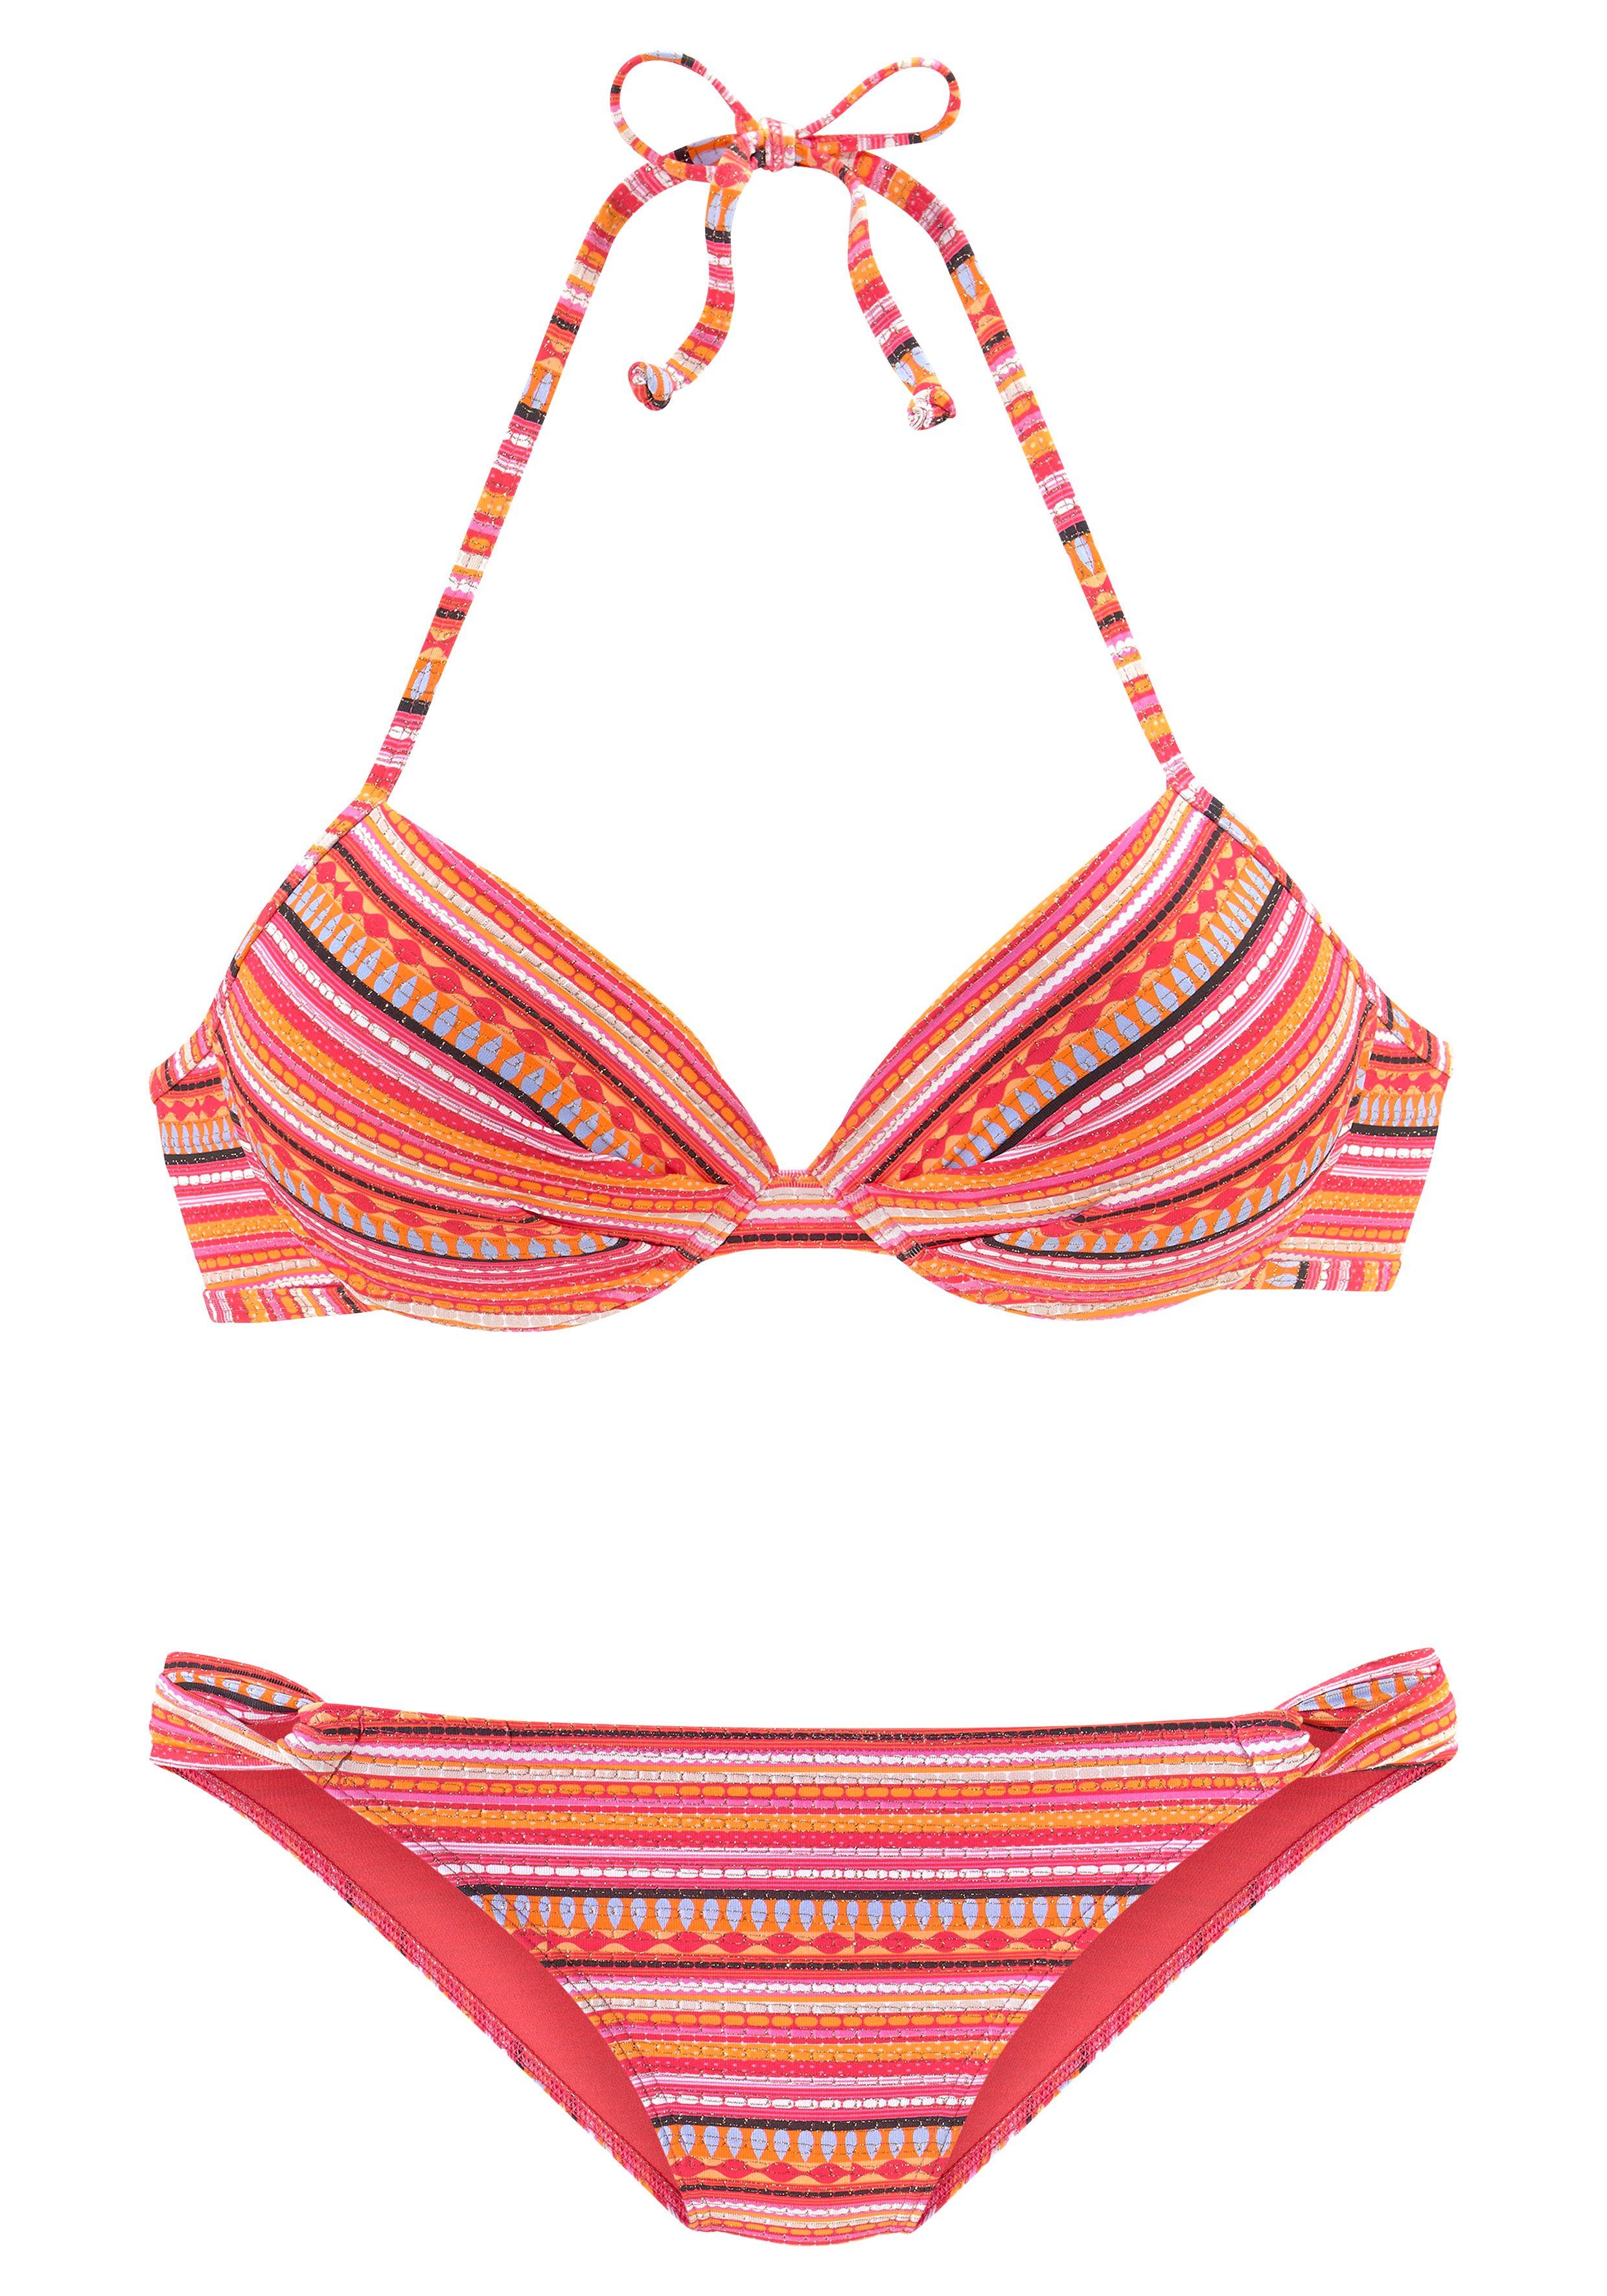 Lascana push-up bikini met all over print roze-oranje-geel